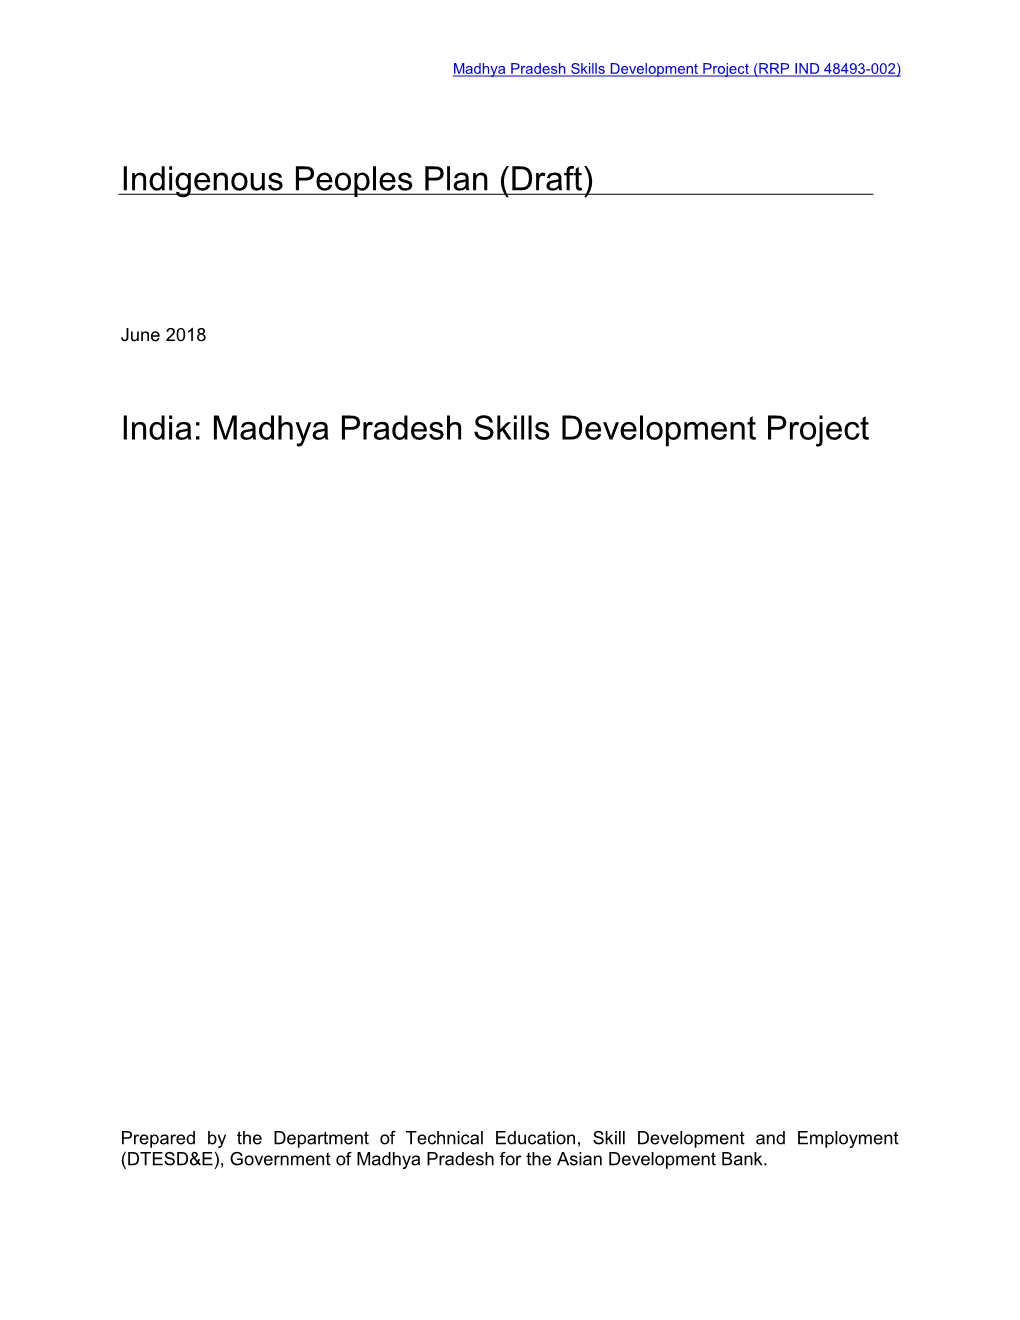 Madhya Pradesh Skills Development Project: Indigenous Peoples Plan